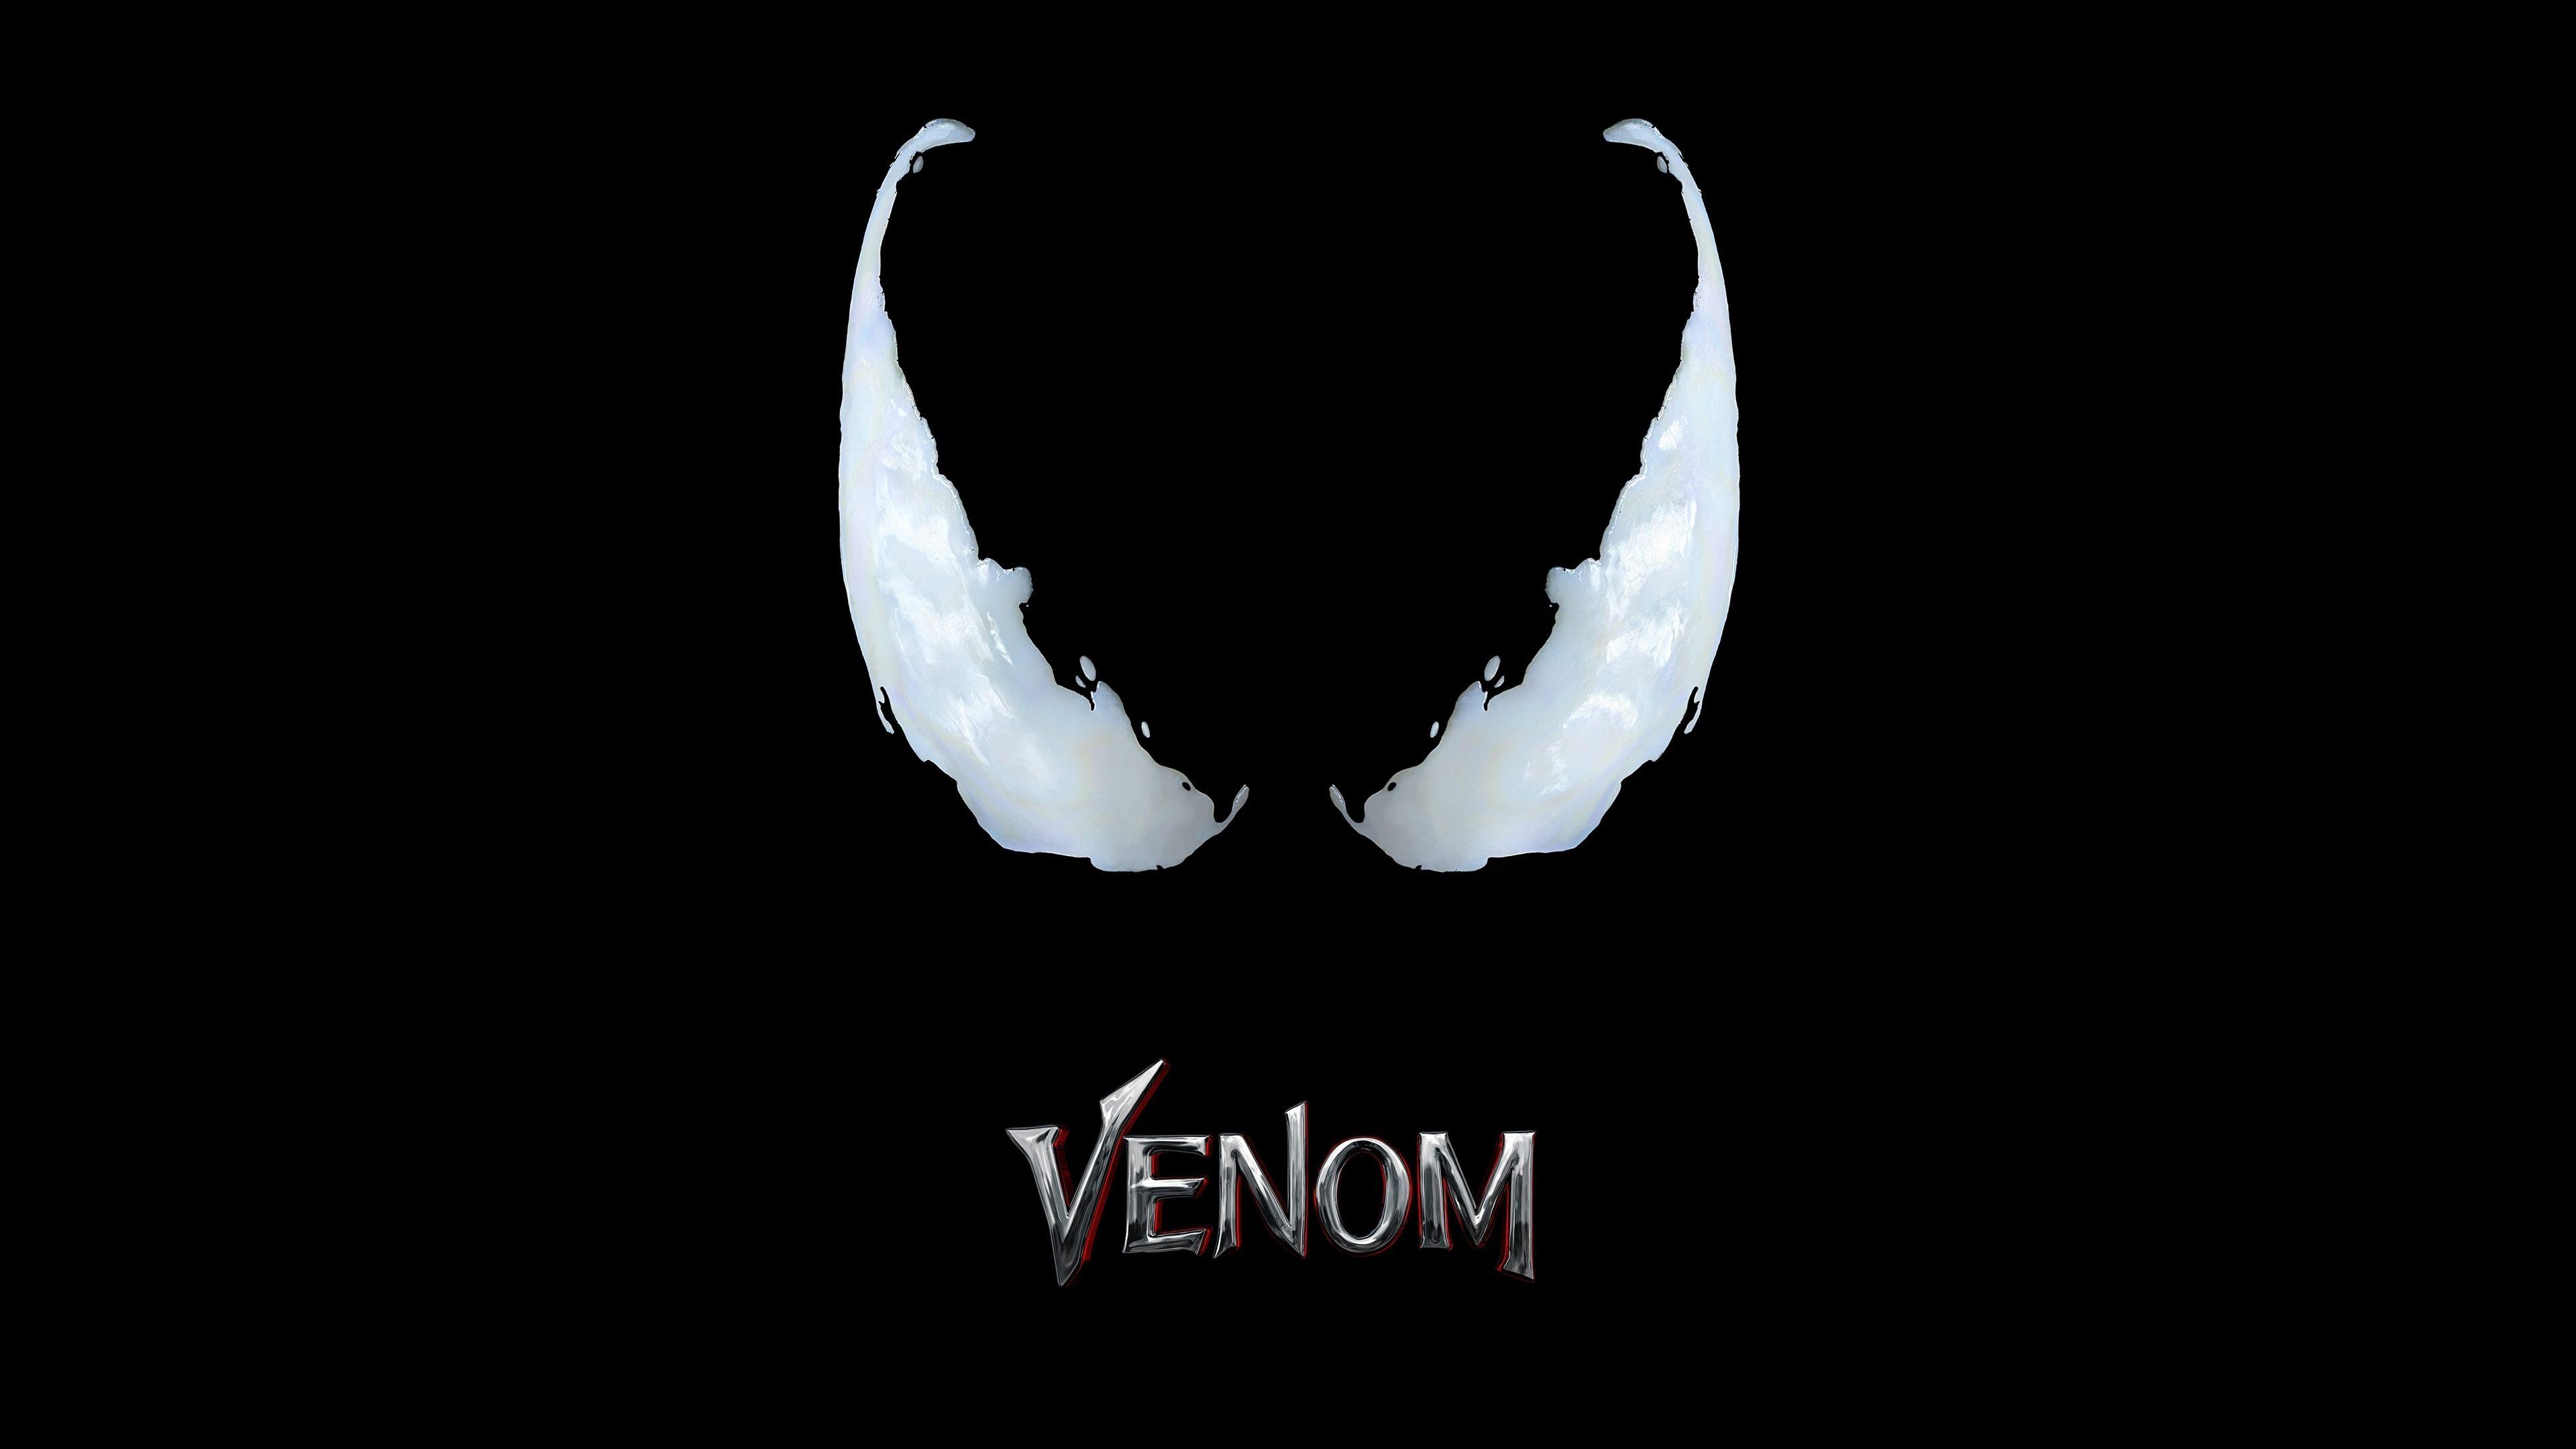 Venom 2018 Movie Poster Wallpaper, HD Movies 4K Wallpaper, Image